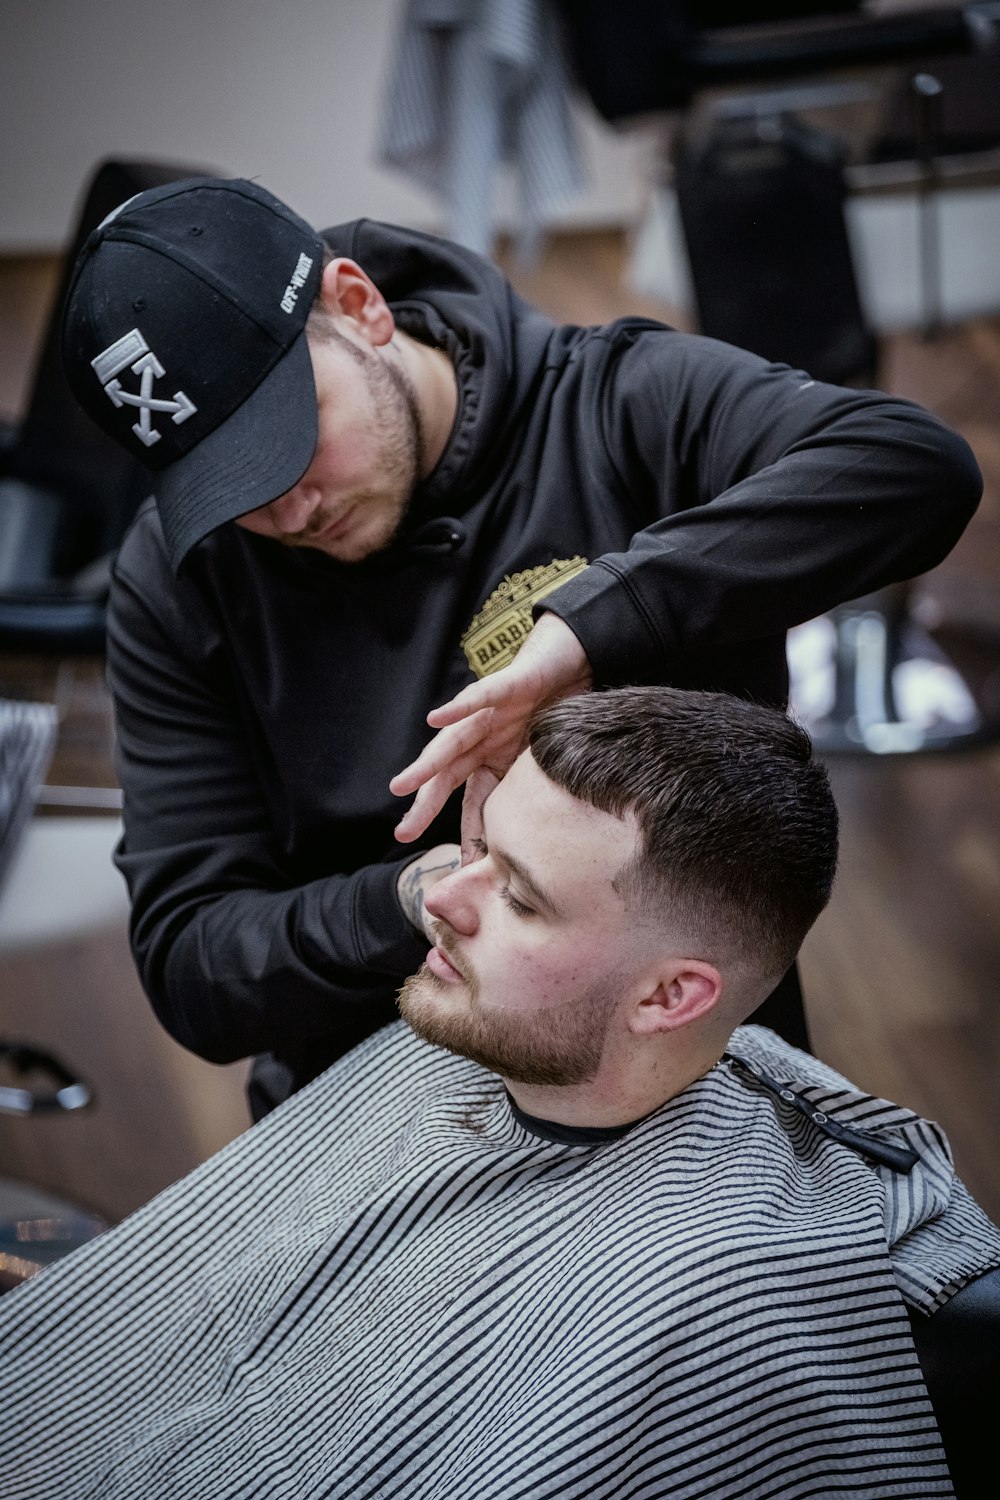 Man Getting His Hair Cut at a Barber Shop · Free Stock Photo